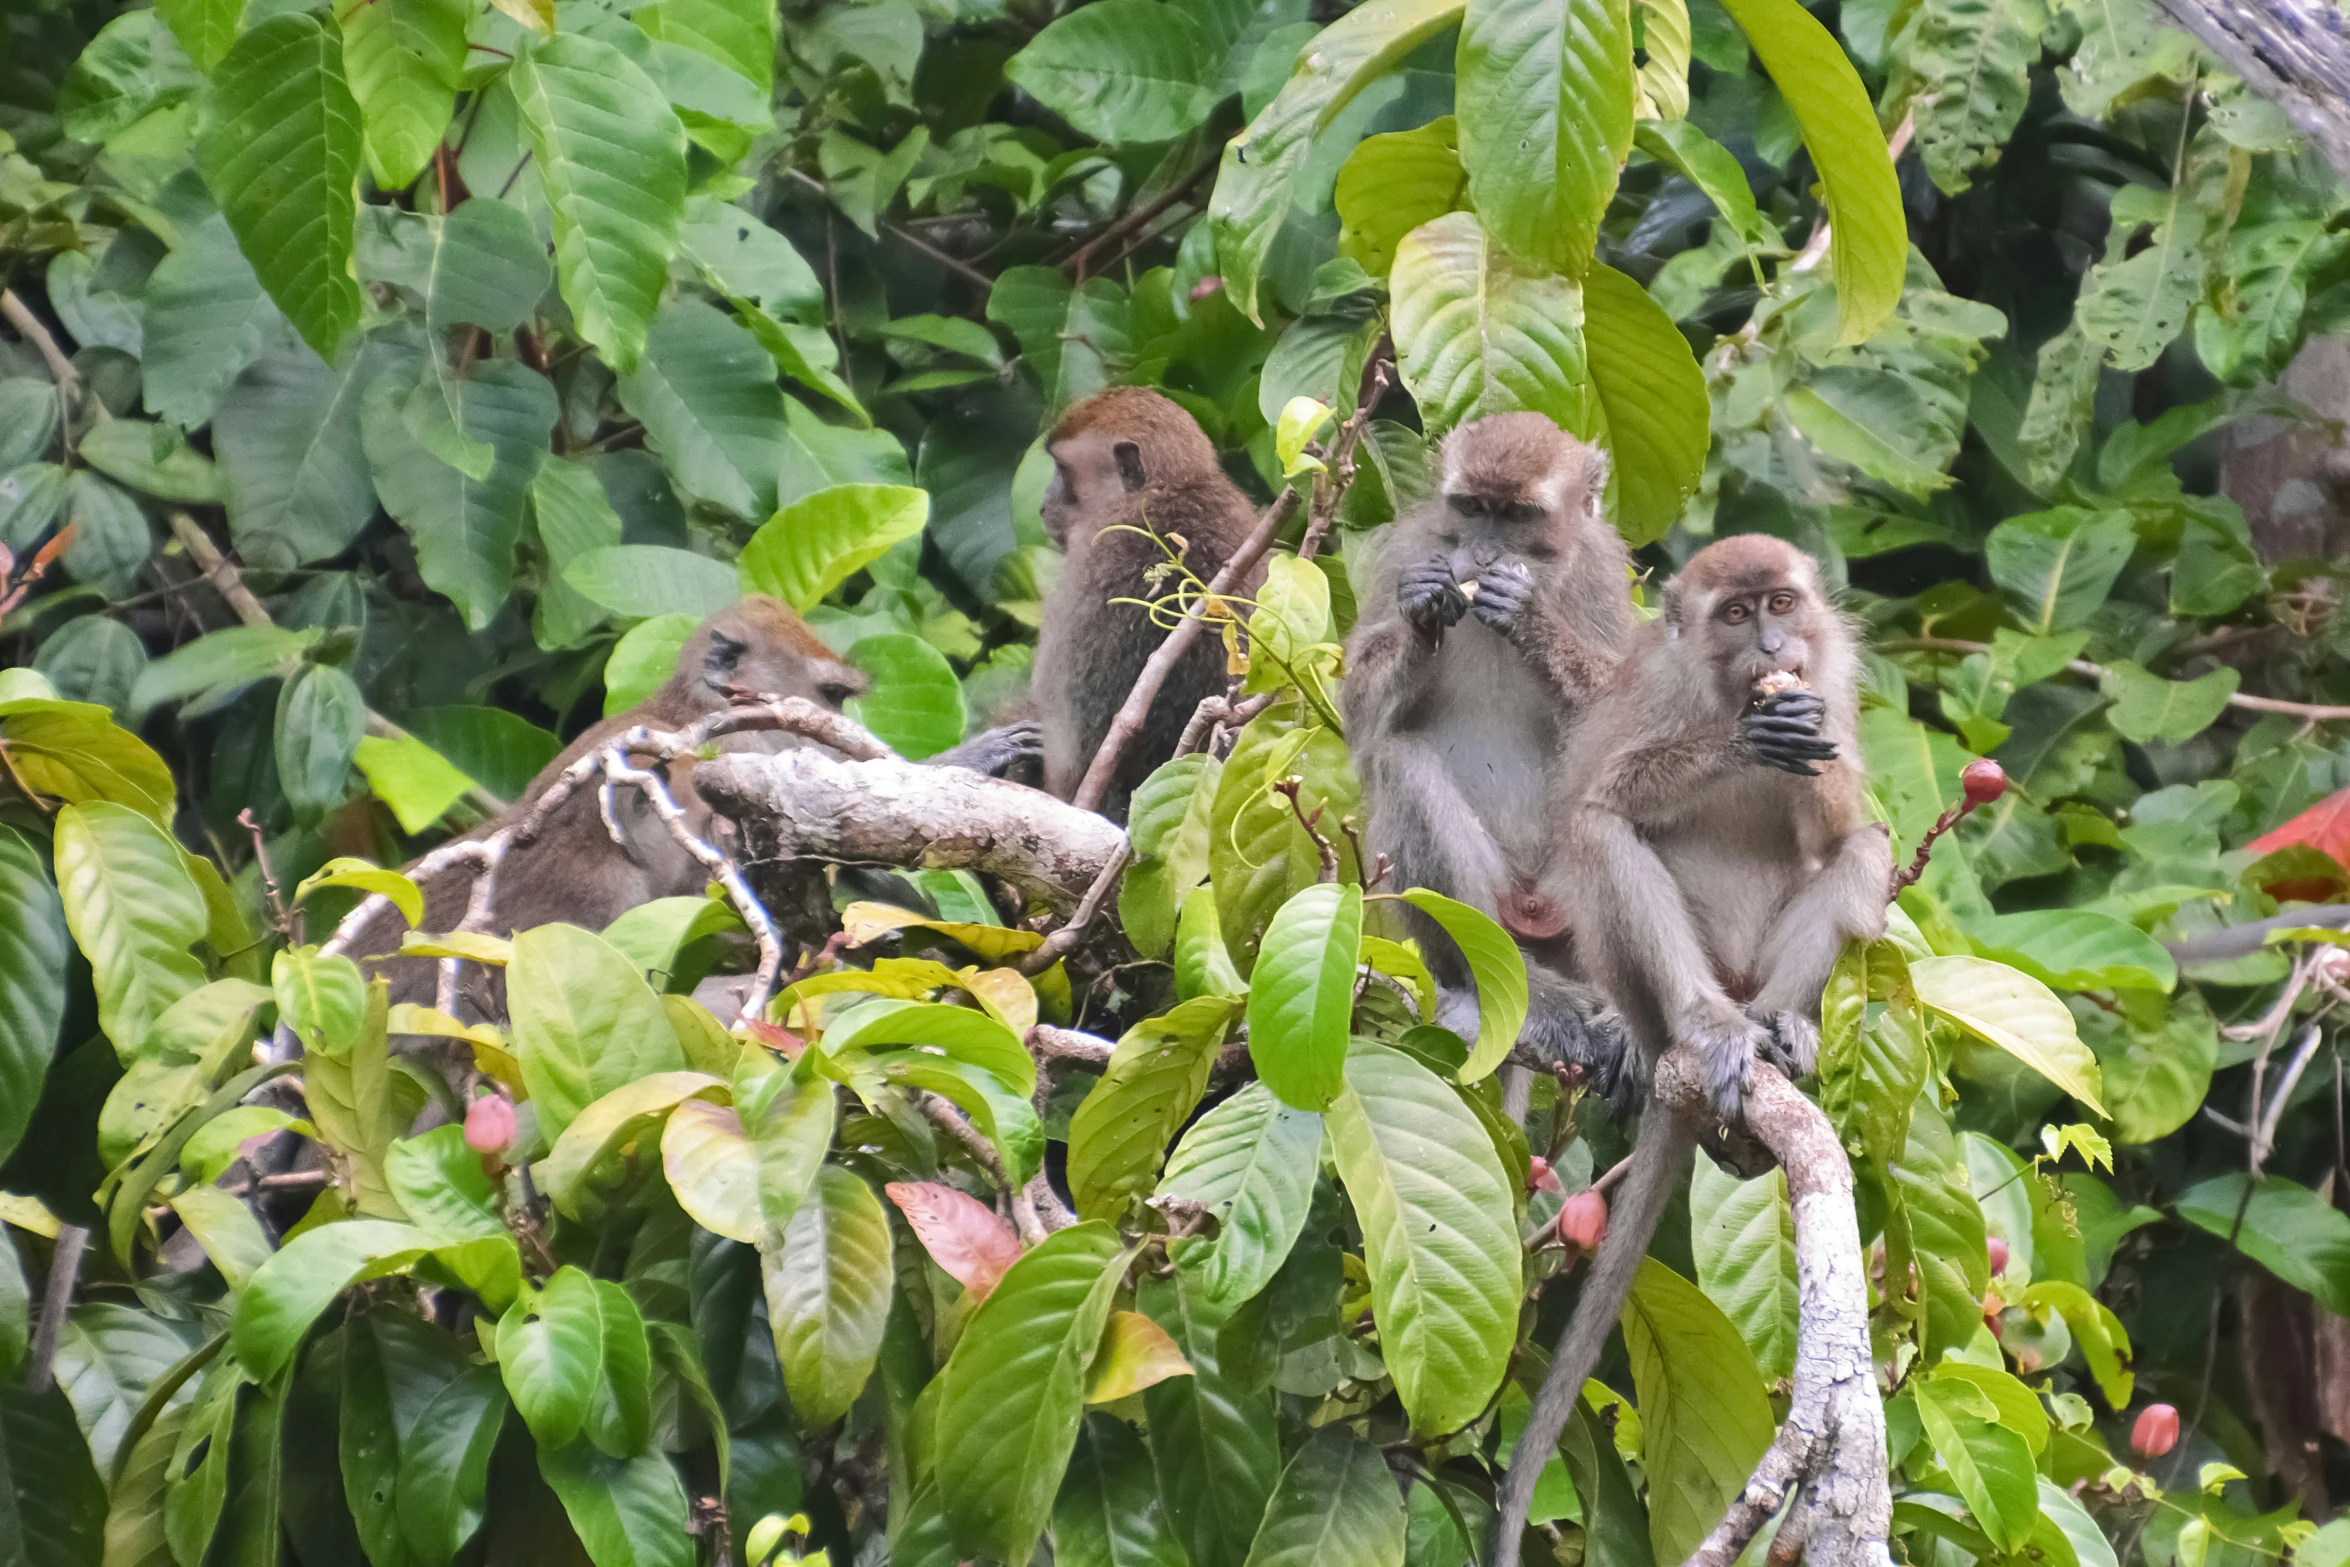 monkeys in the midst of trees eating leaves